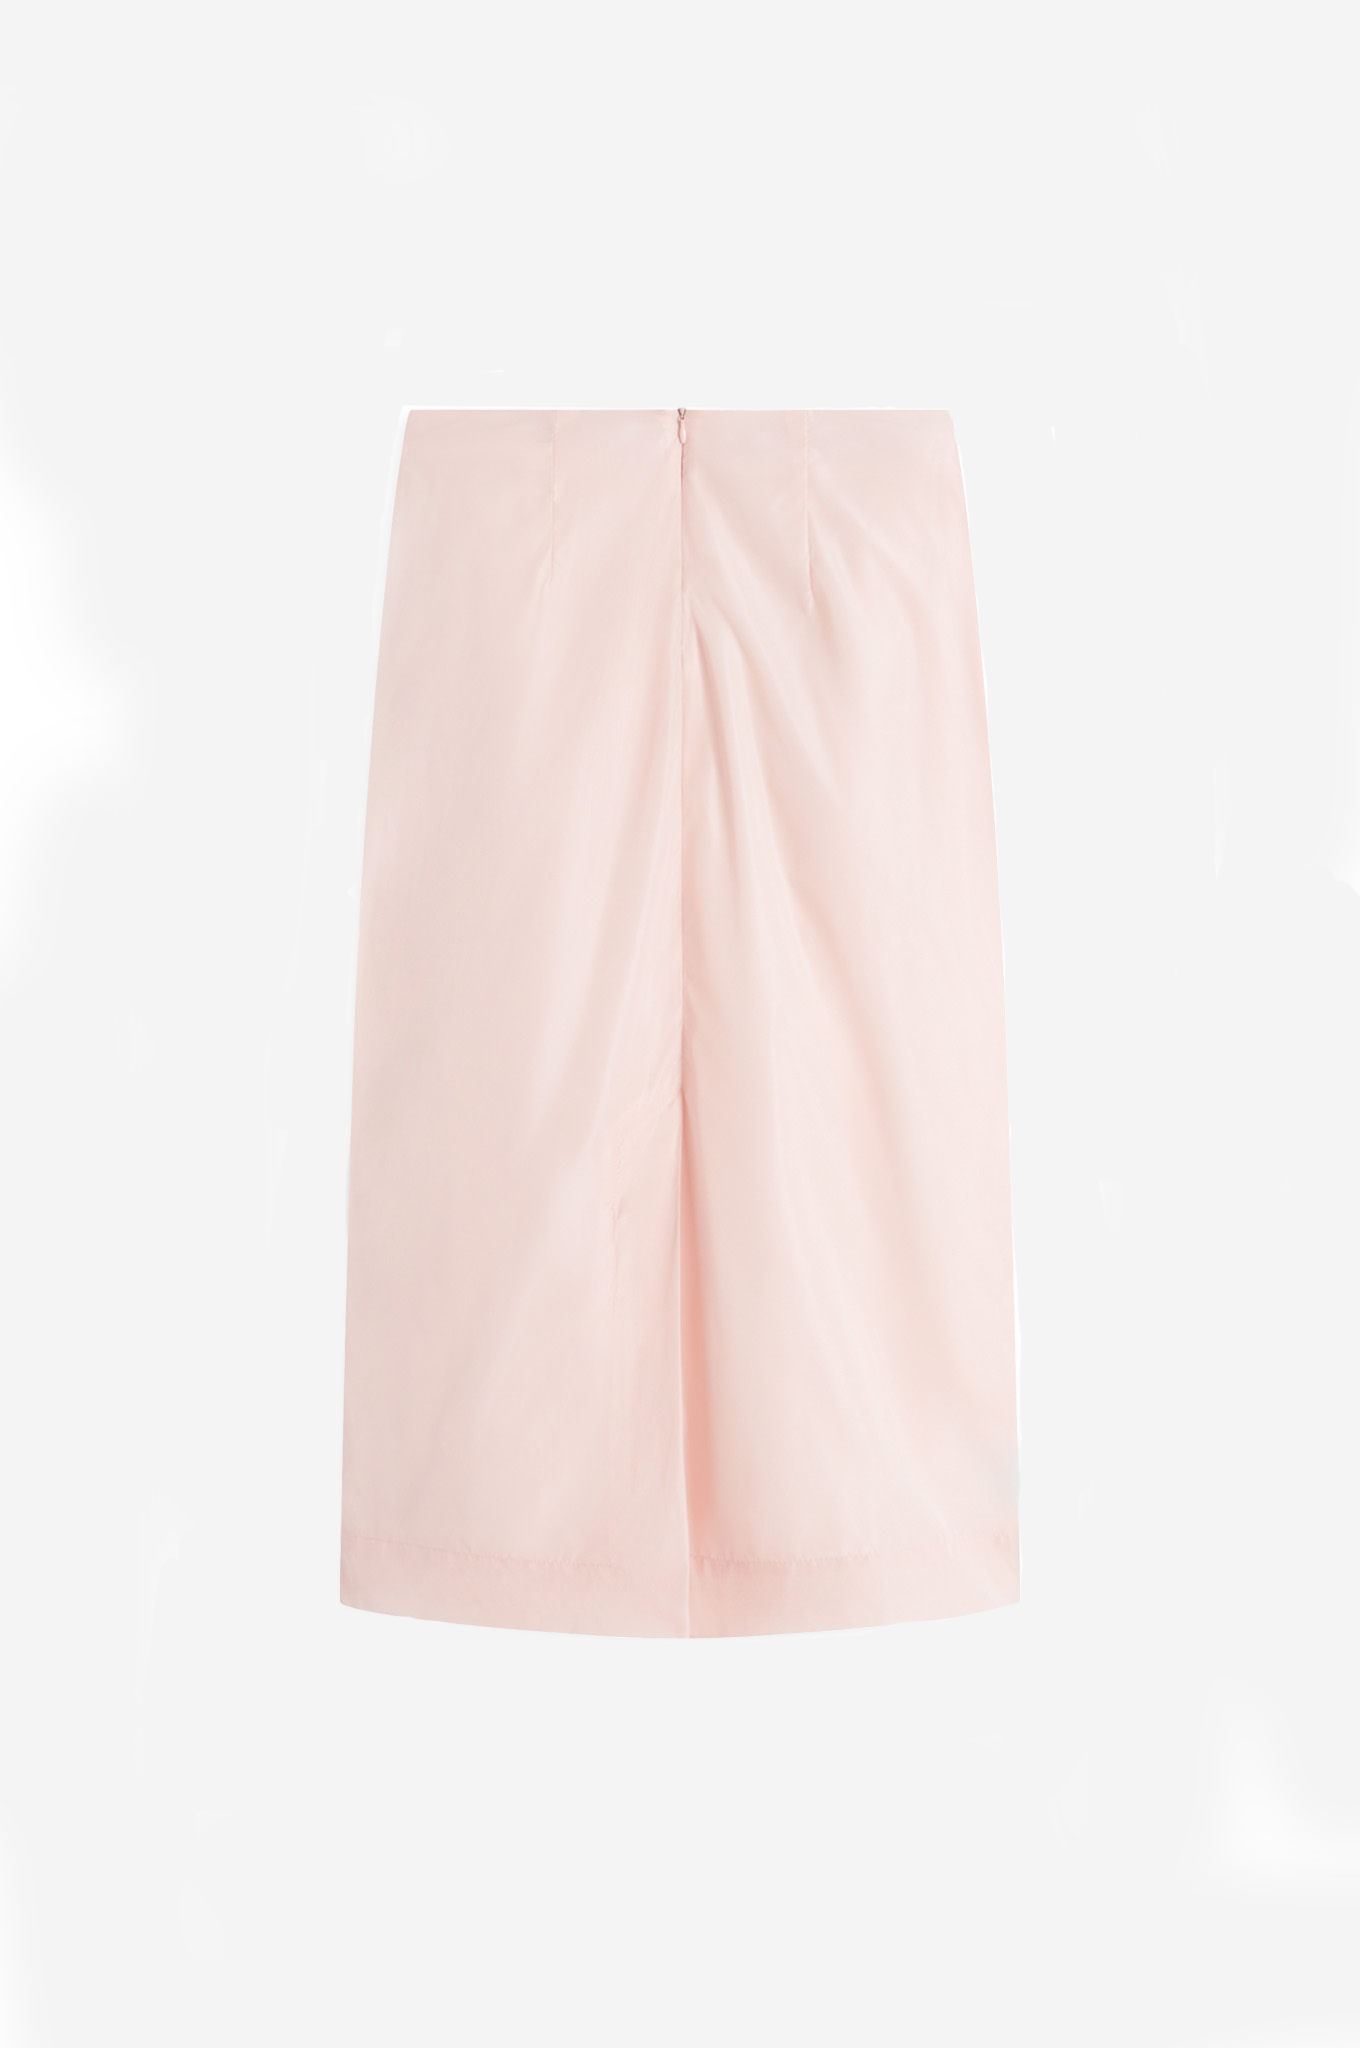 Pressed Rose Pencil Skirt